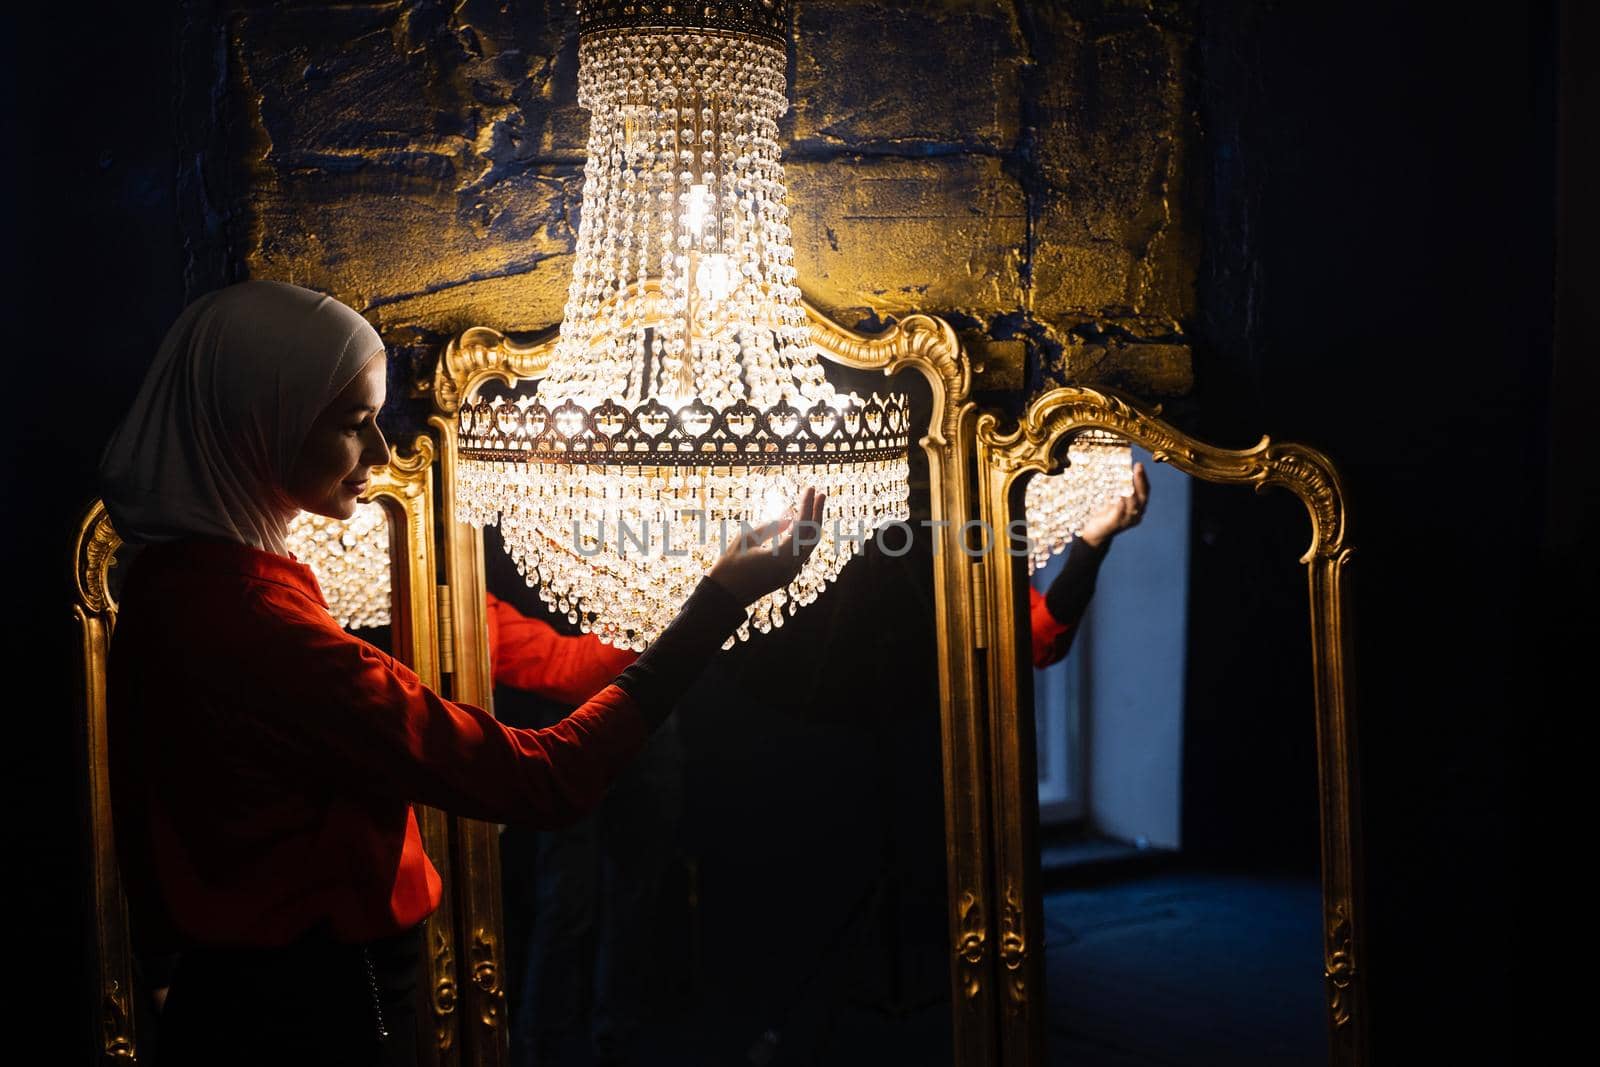 Fashion muslim model near big expensive chandelier. Islamic religion. Girl near mirrors